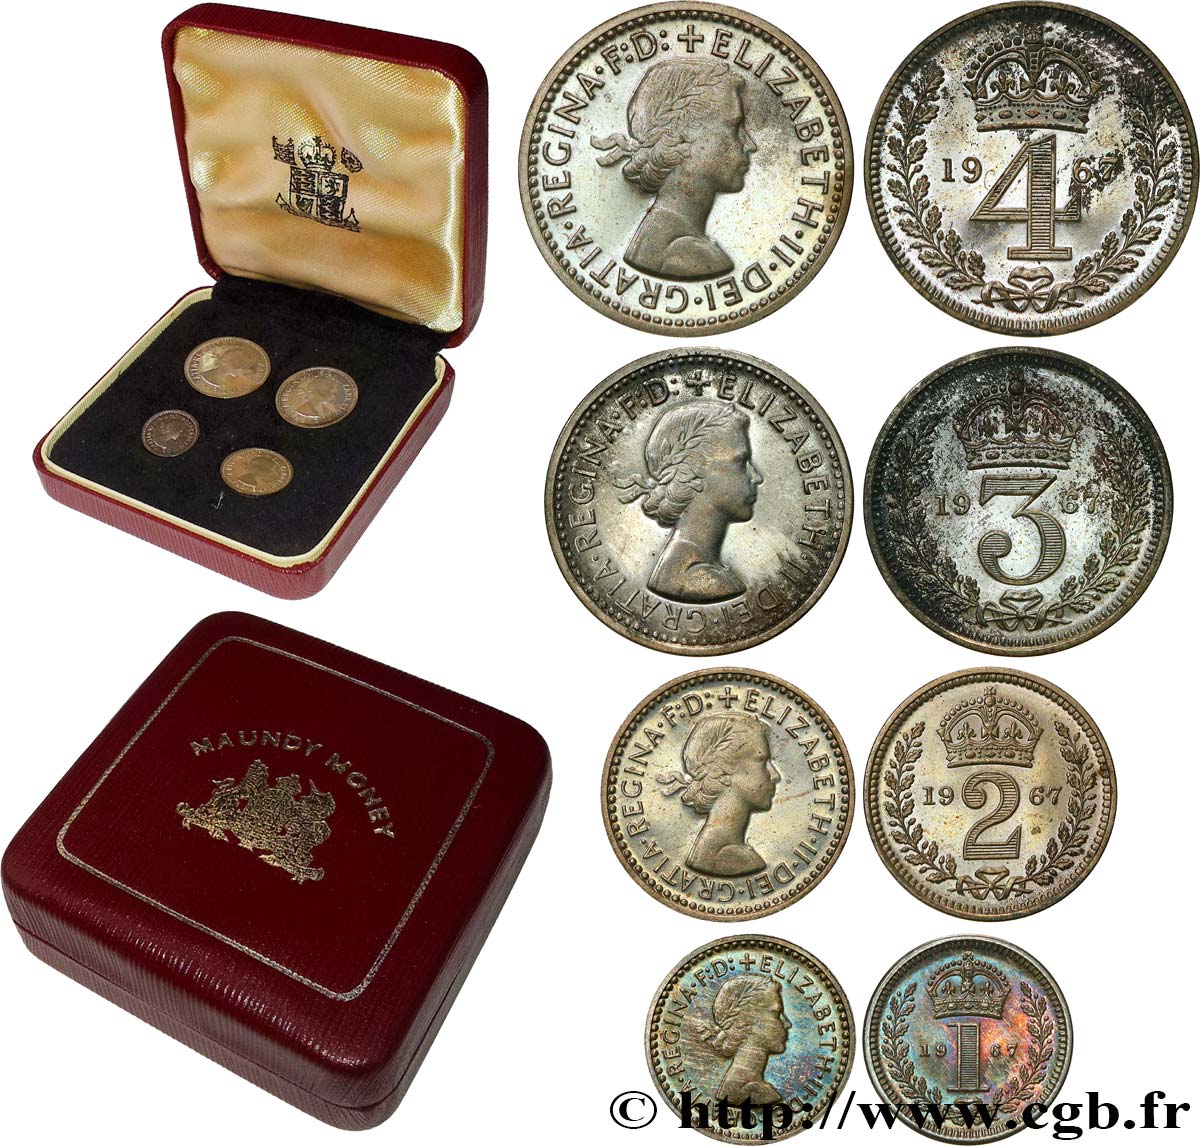 REGNO UNITO Maundy set - Penny, 2 pence, 3 pence et 4 pence 1967  BU 